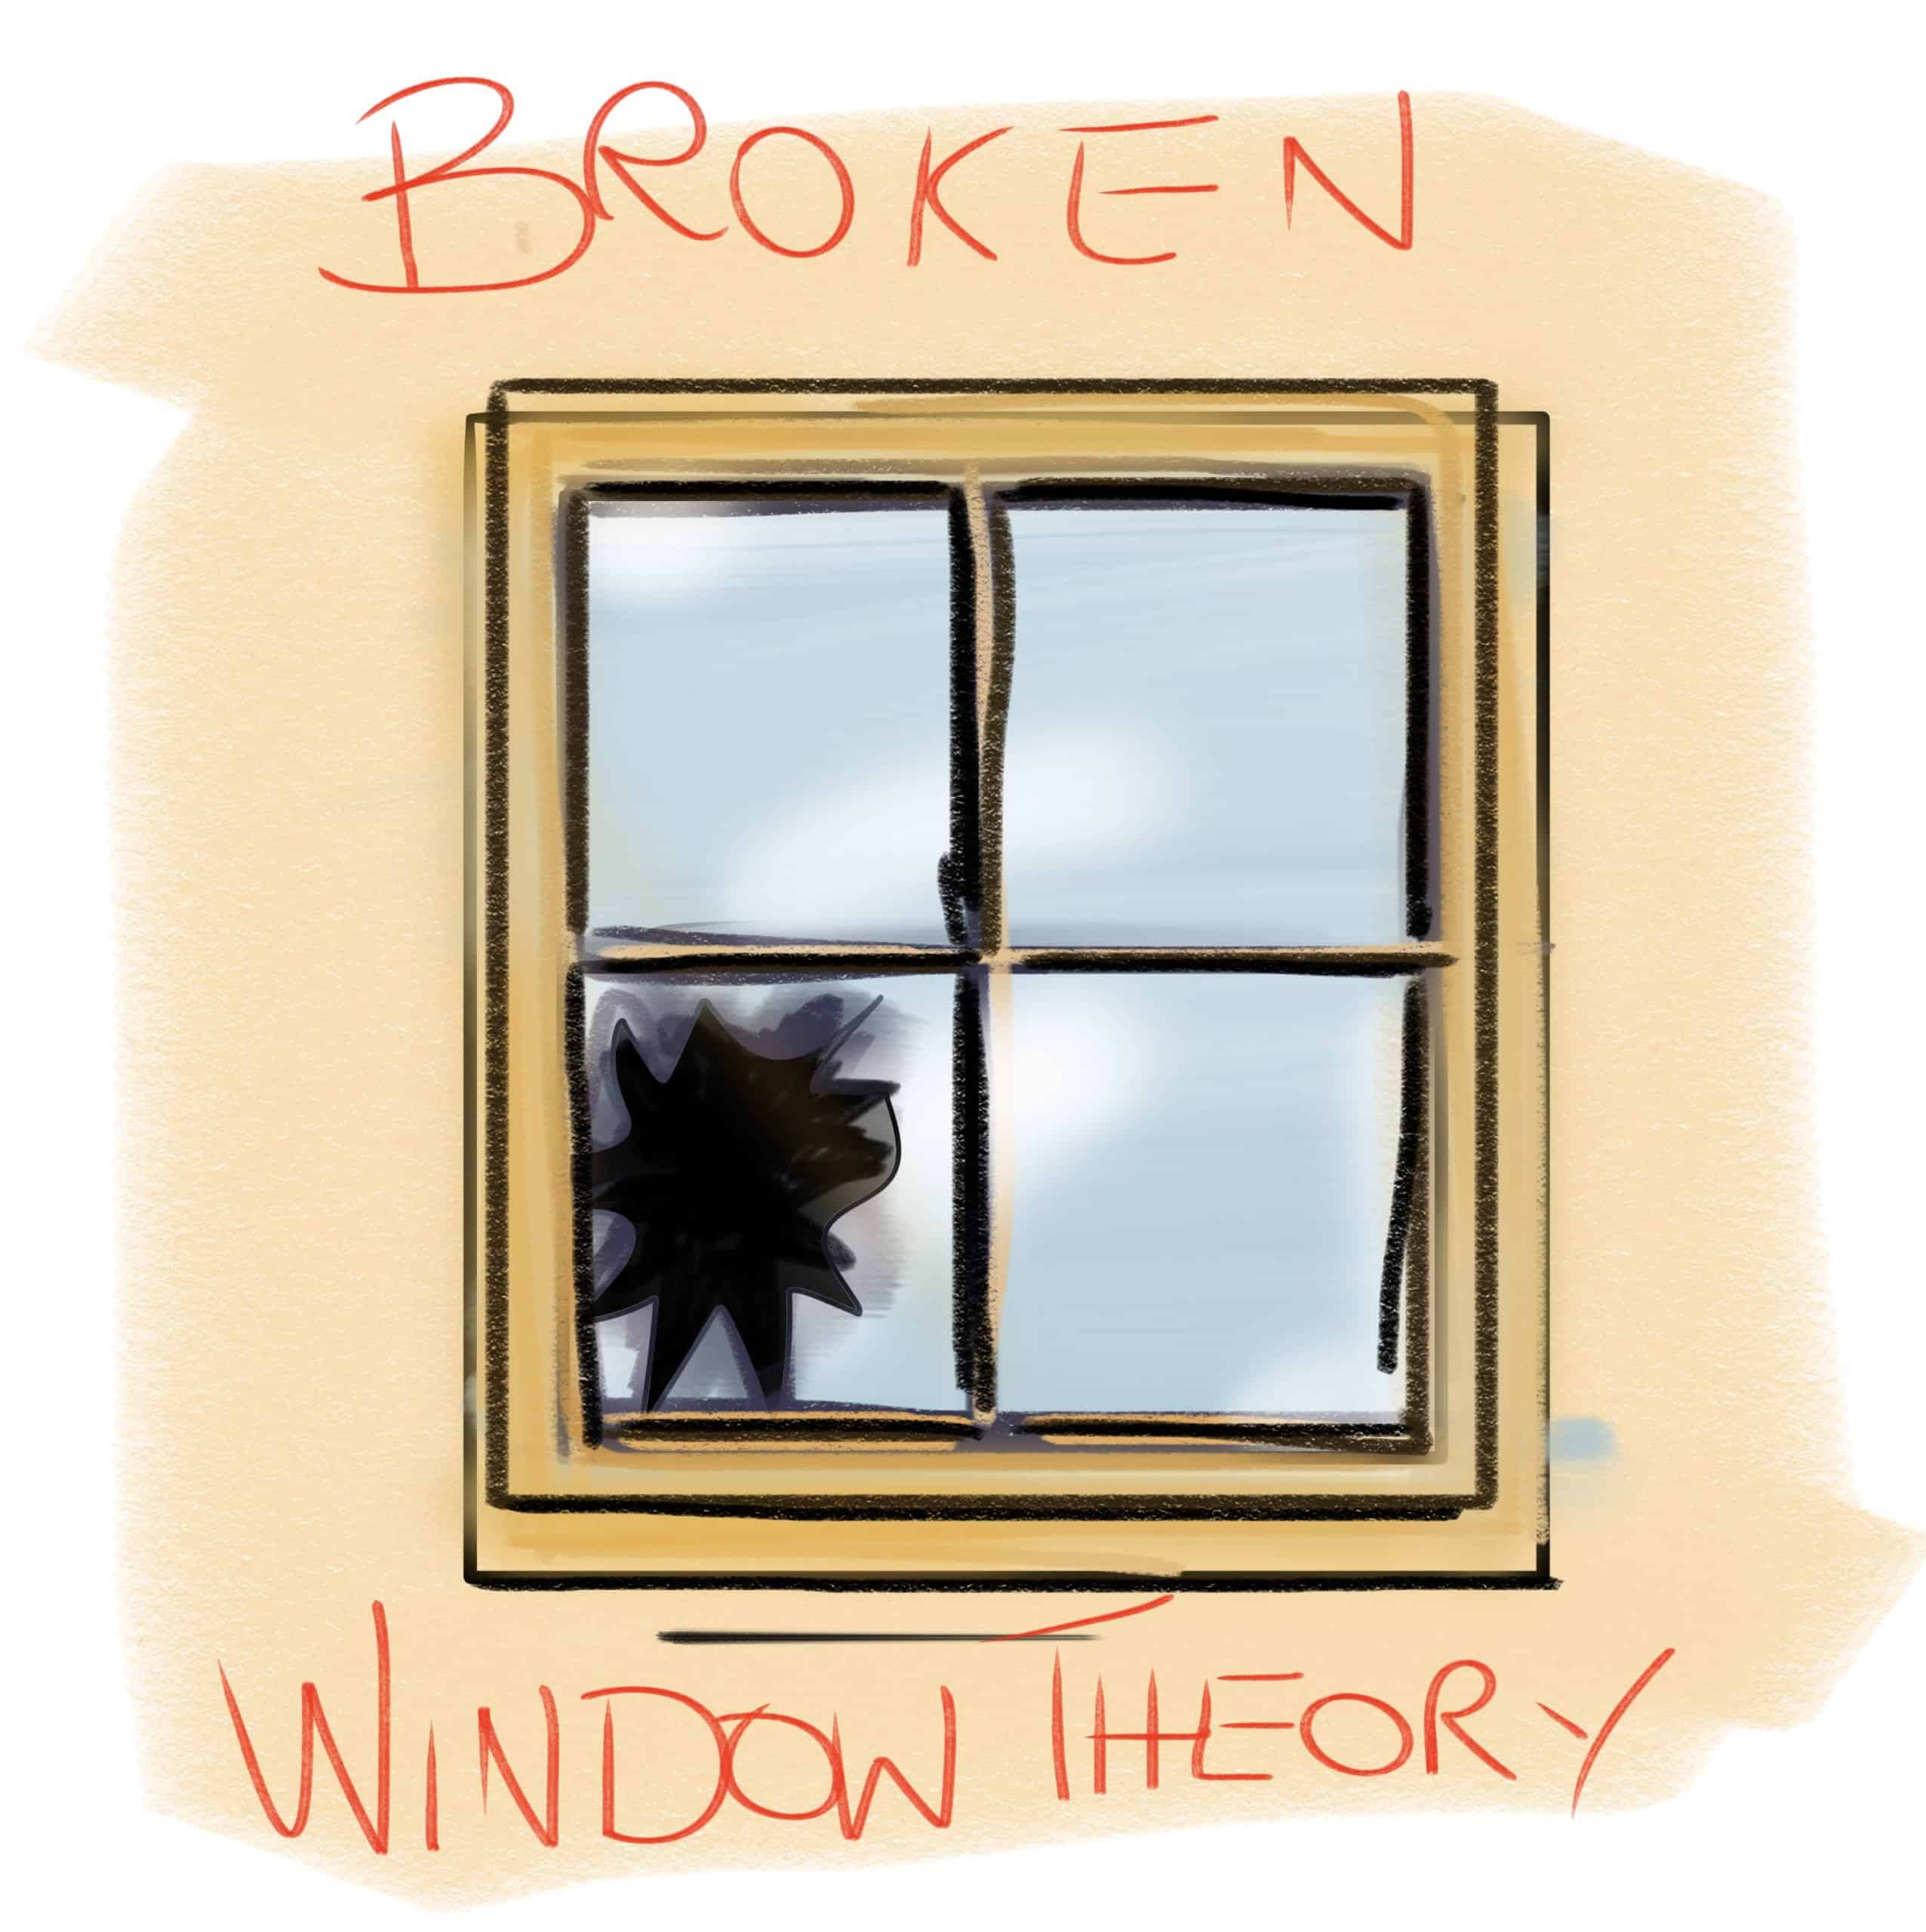 broken window theory leadership